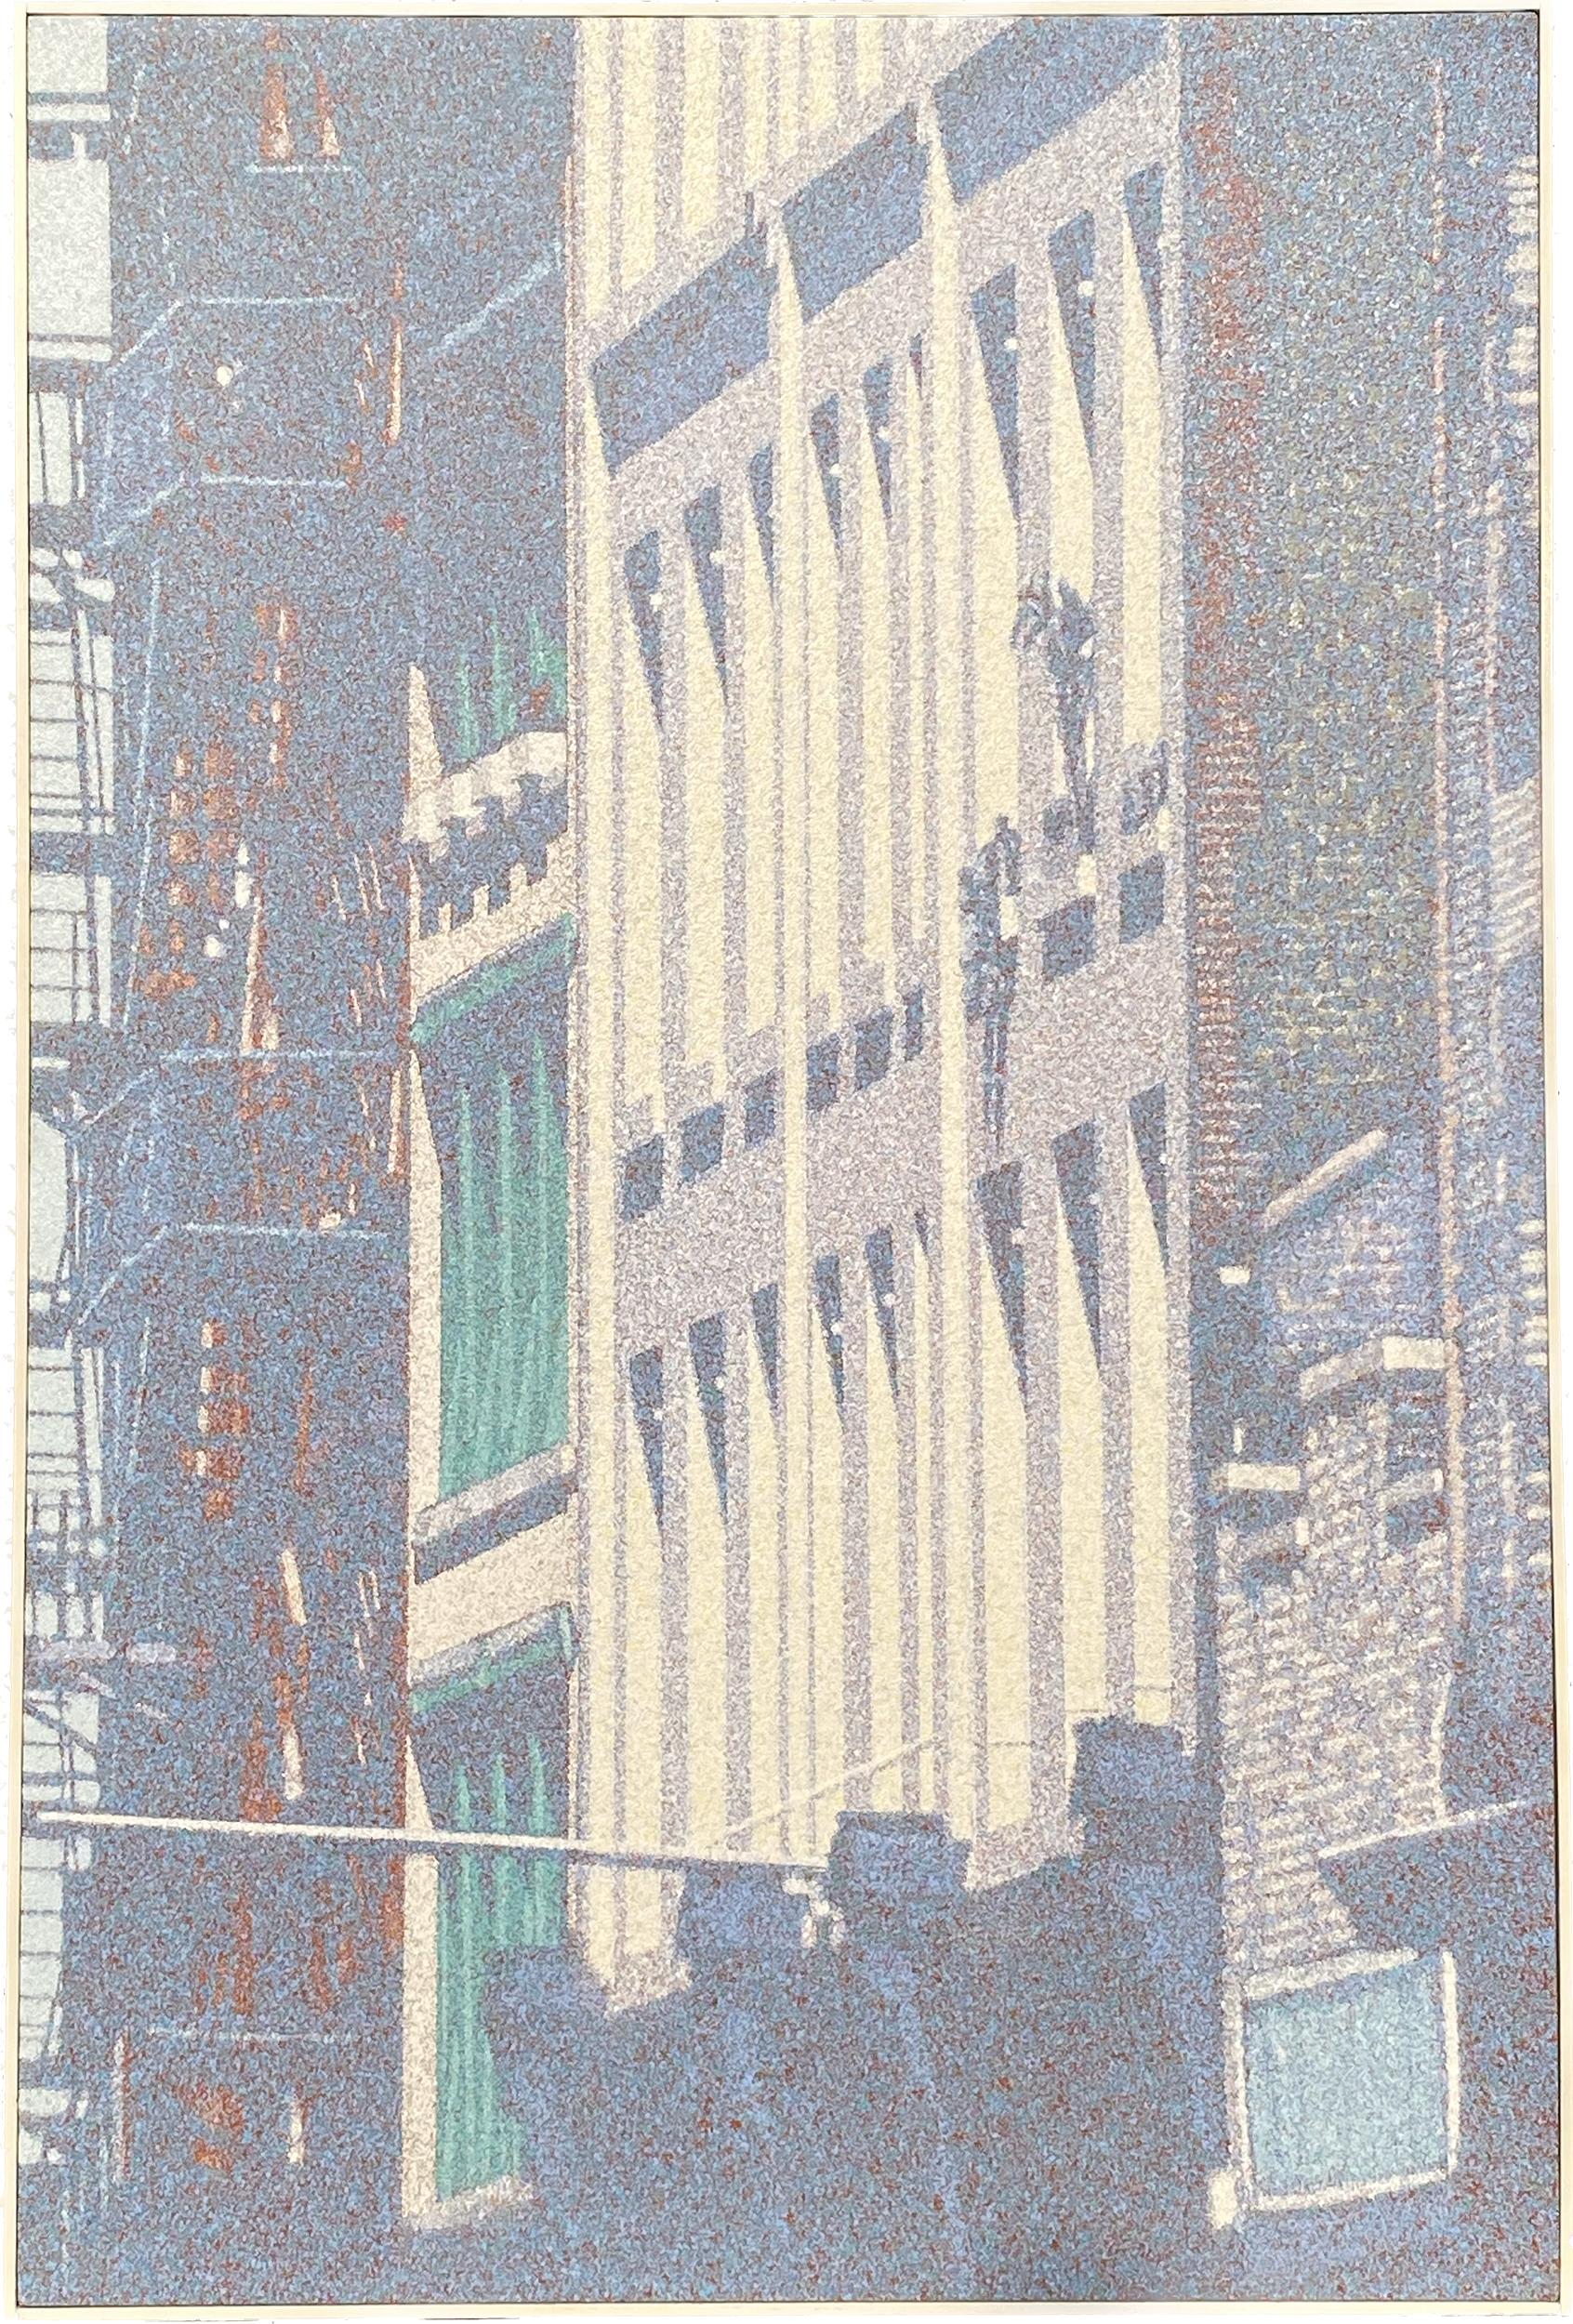 465 W Broadway - Fire Escape, New York City peinture de Han Hsiang-ning